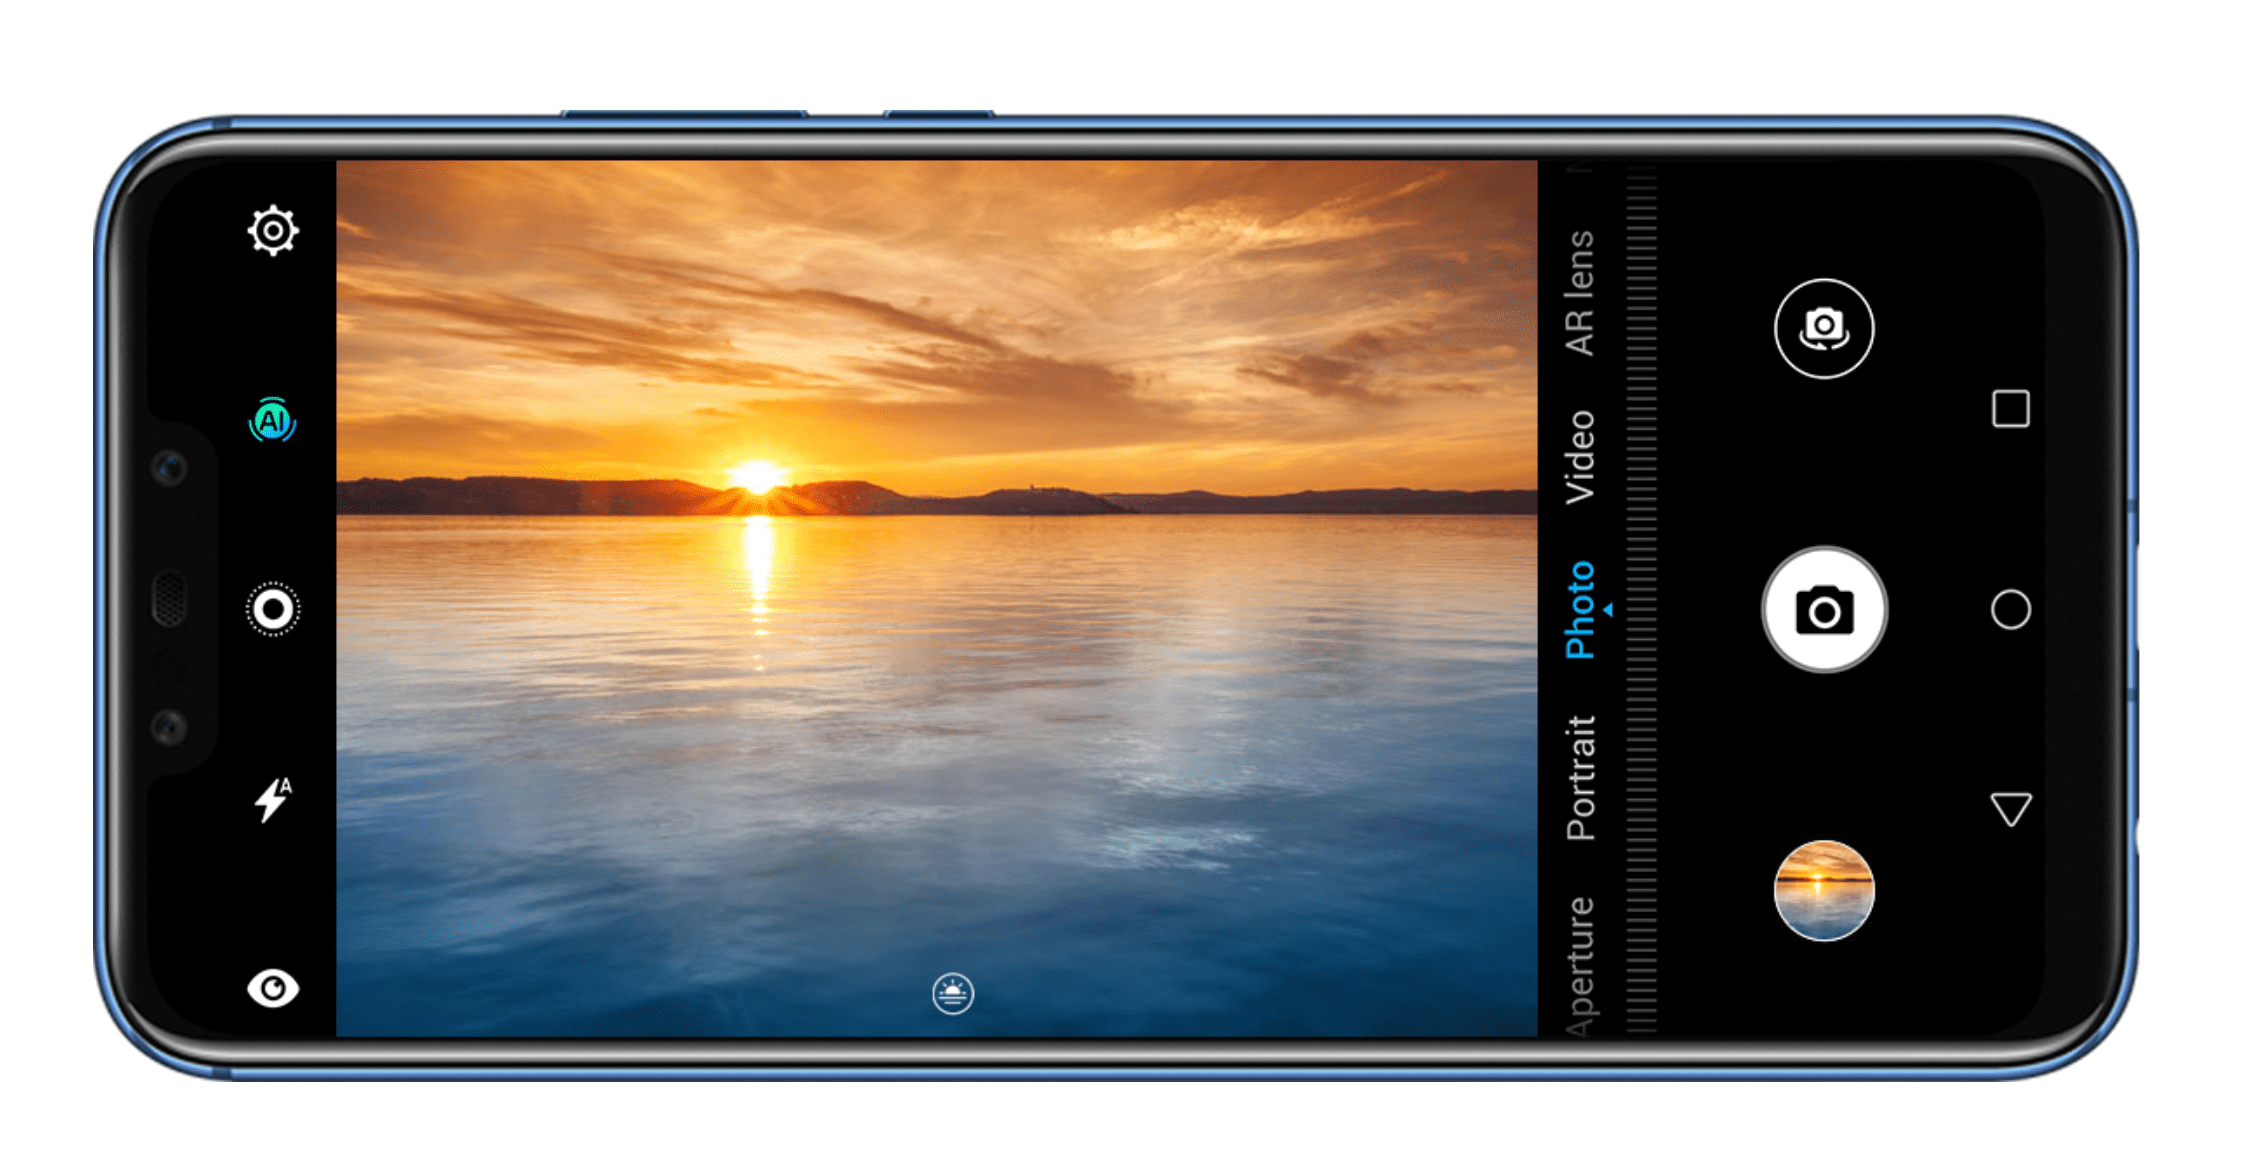 Комплект: Huawei Mate 20 lite + Huawei Y5 (2018) или Huawei Mate 10 lite в подарок